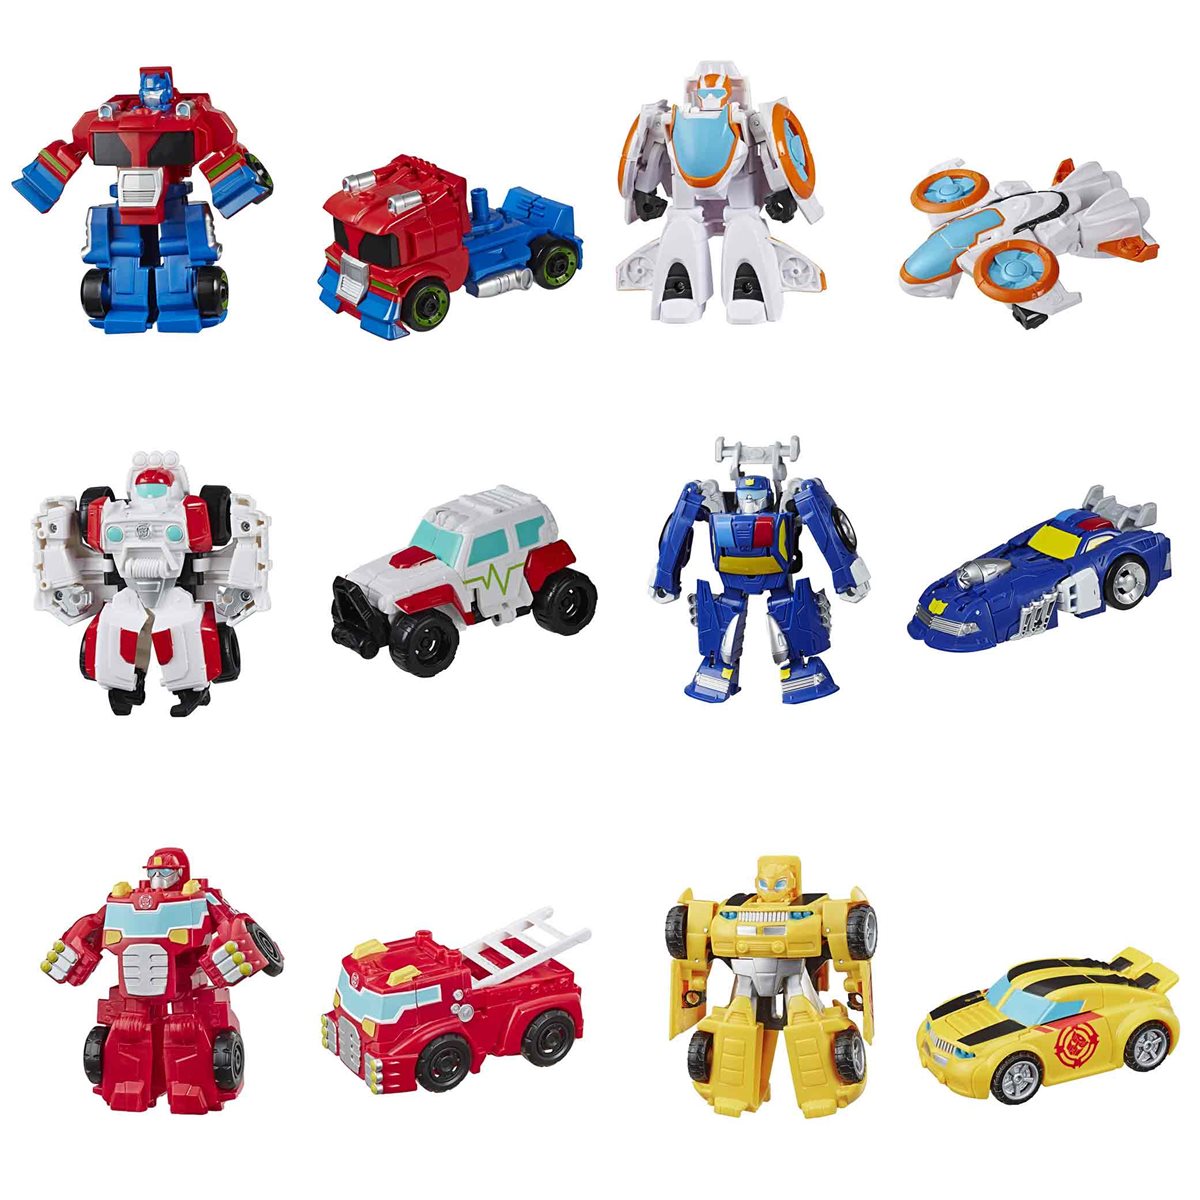 transformers battle bots